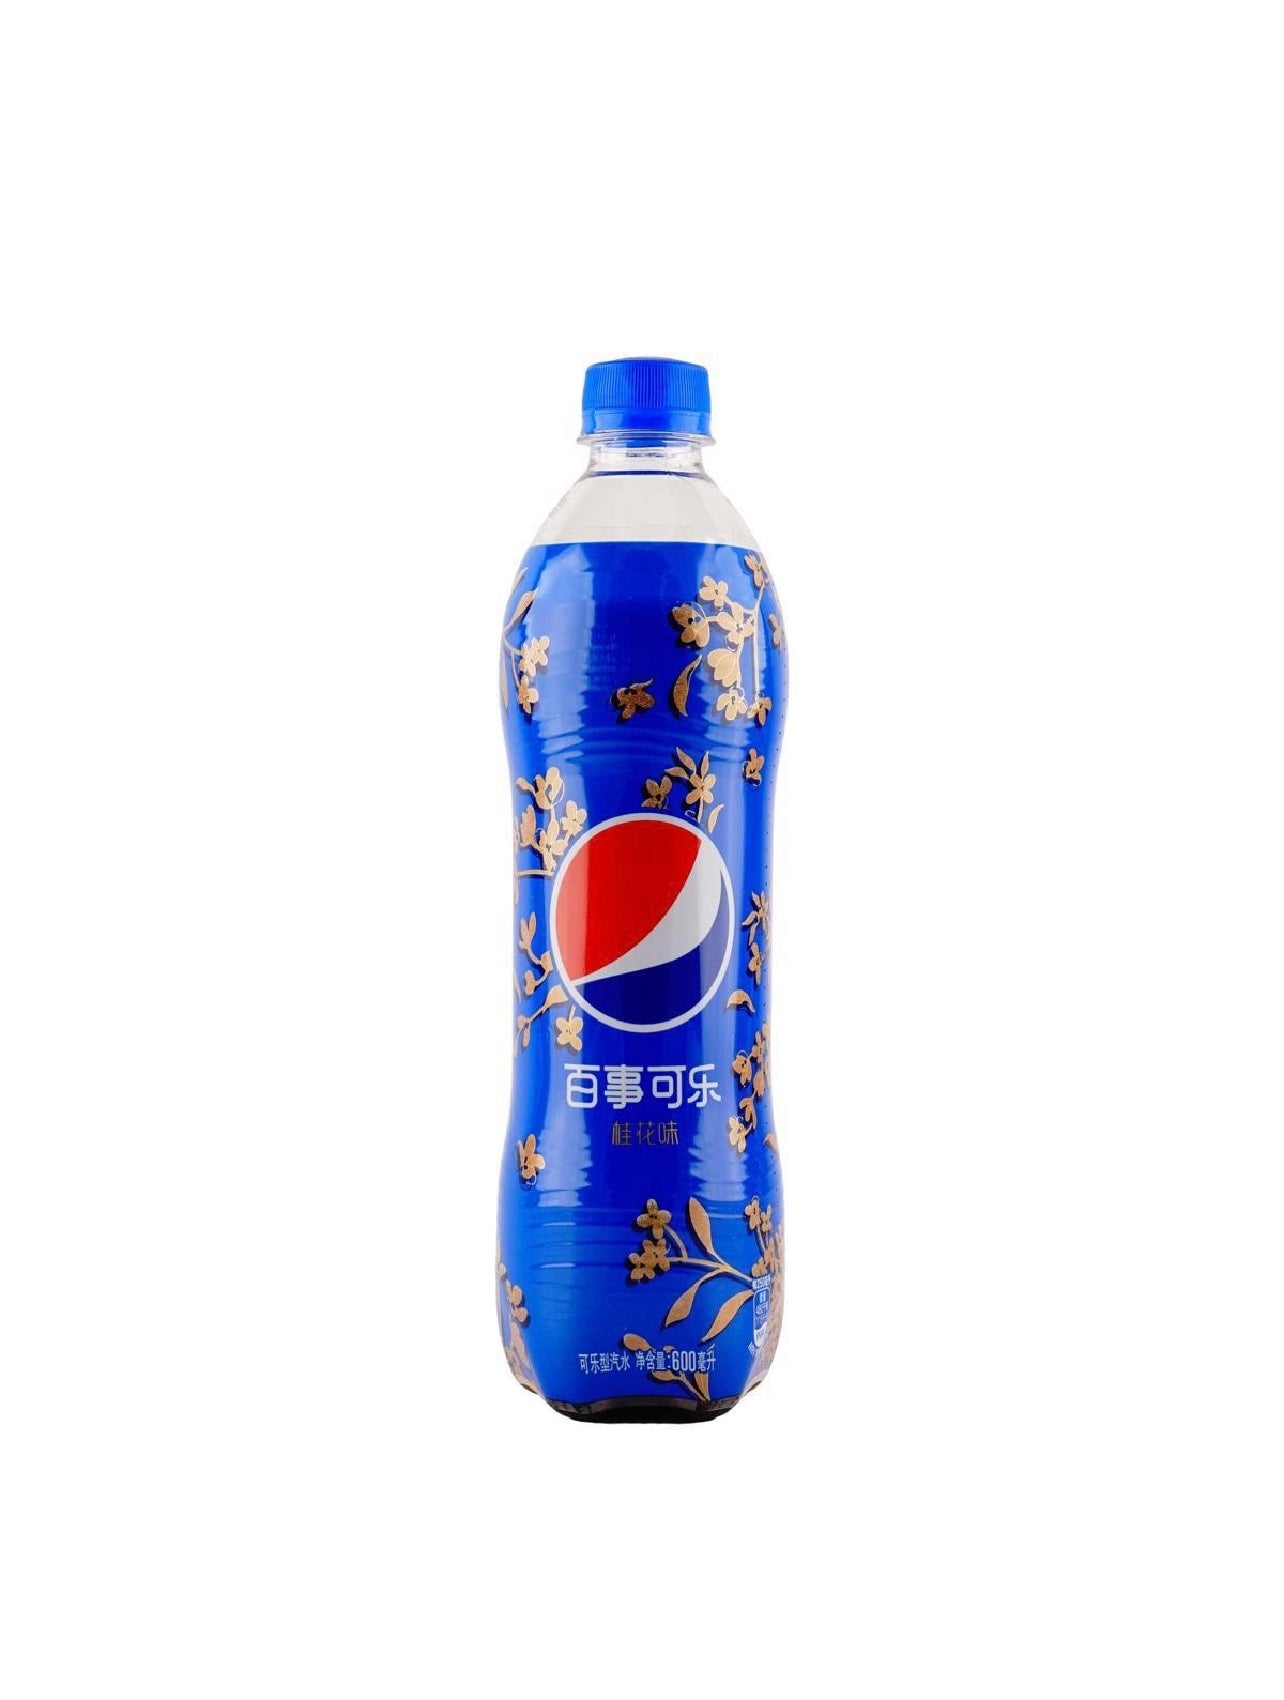 Pepsi Osmanthus Bottled,20.29 fl oz